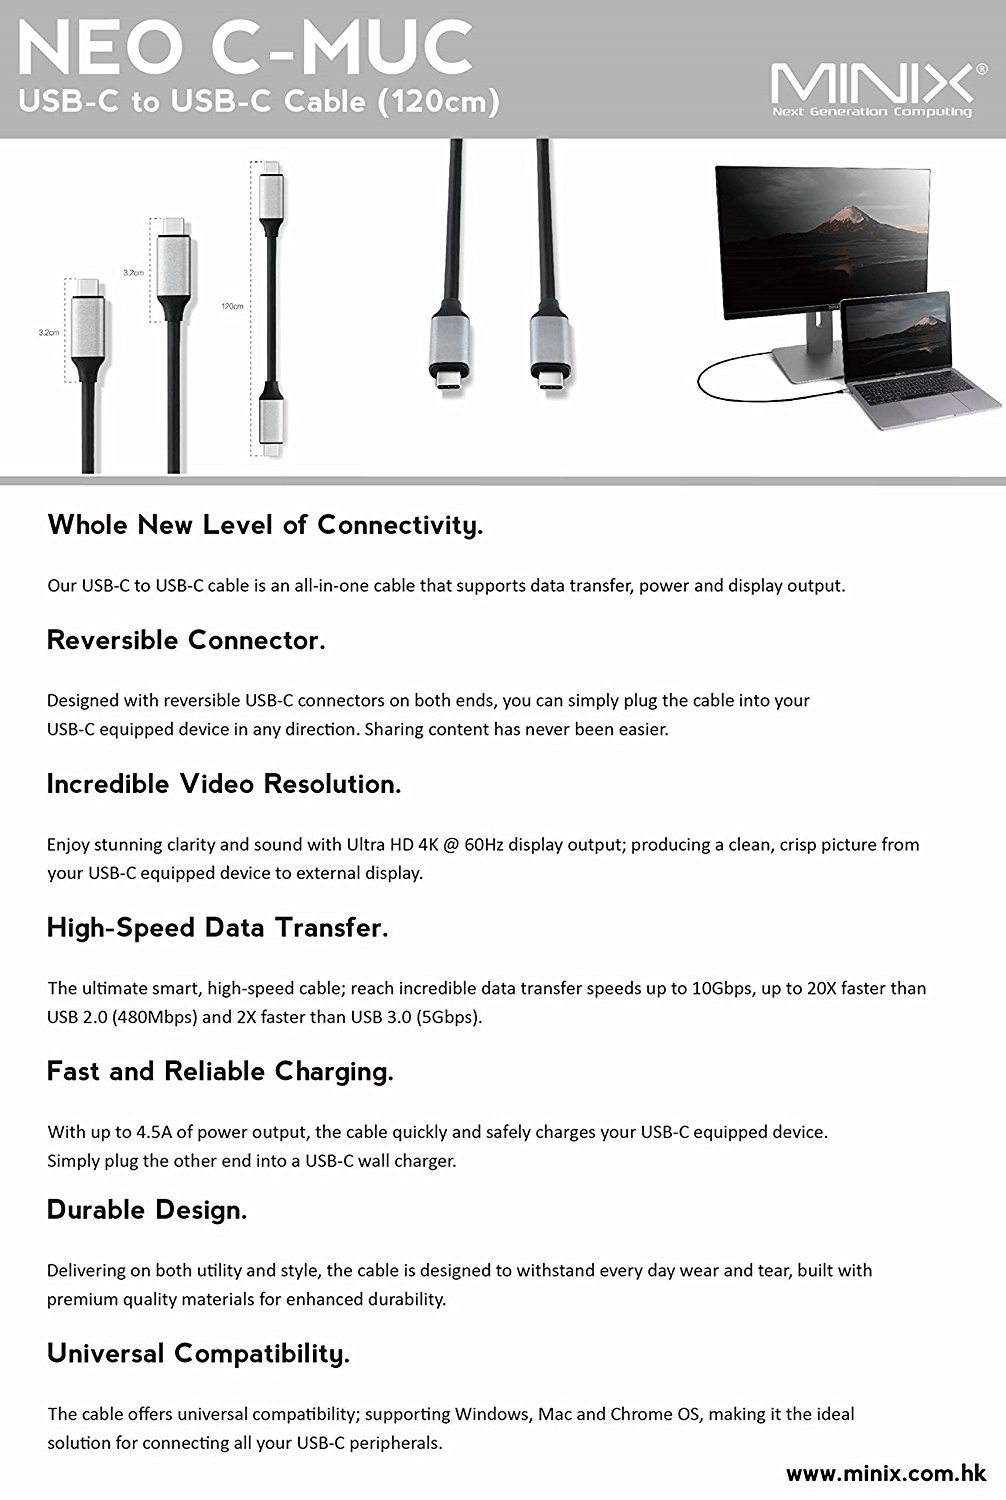 MINIX NEO C-MUC, Multi-Purpose USB-C to USB-C Cable (Length – 120cm) [Universal Compatibility – Windows, Mac and Chrome OS]